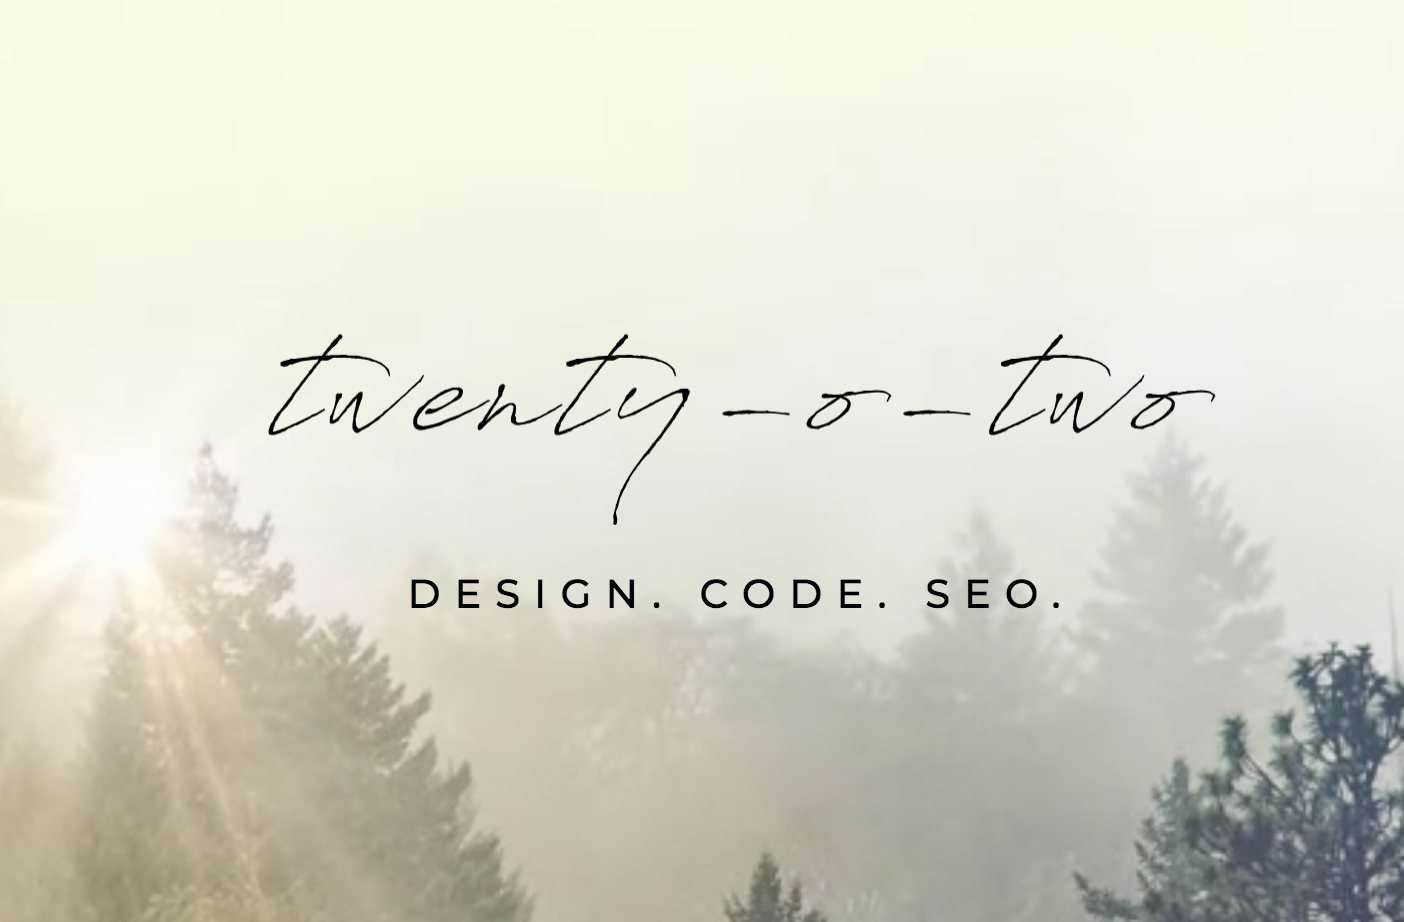 Logo of Twenty-o-two Ltd